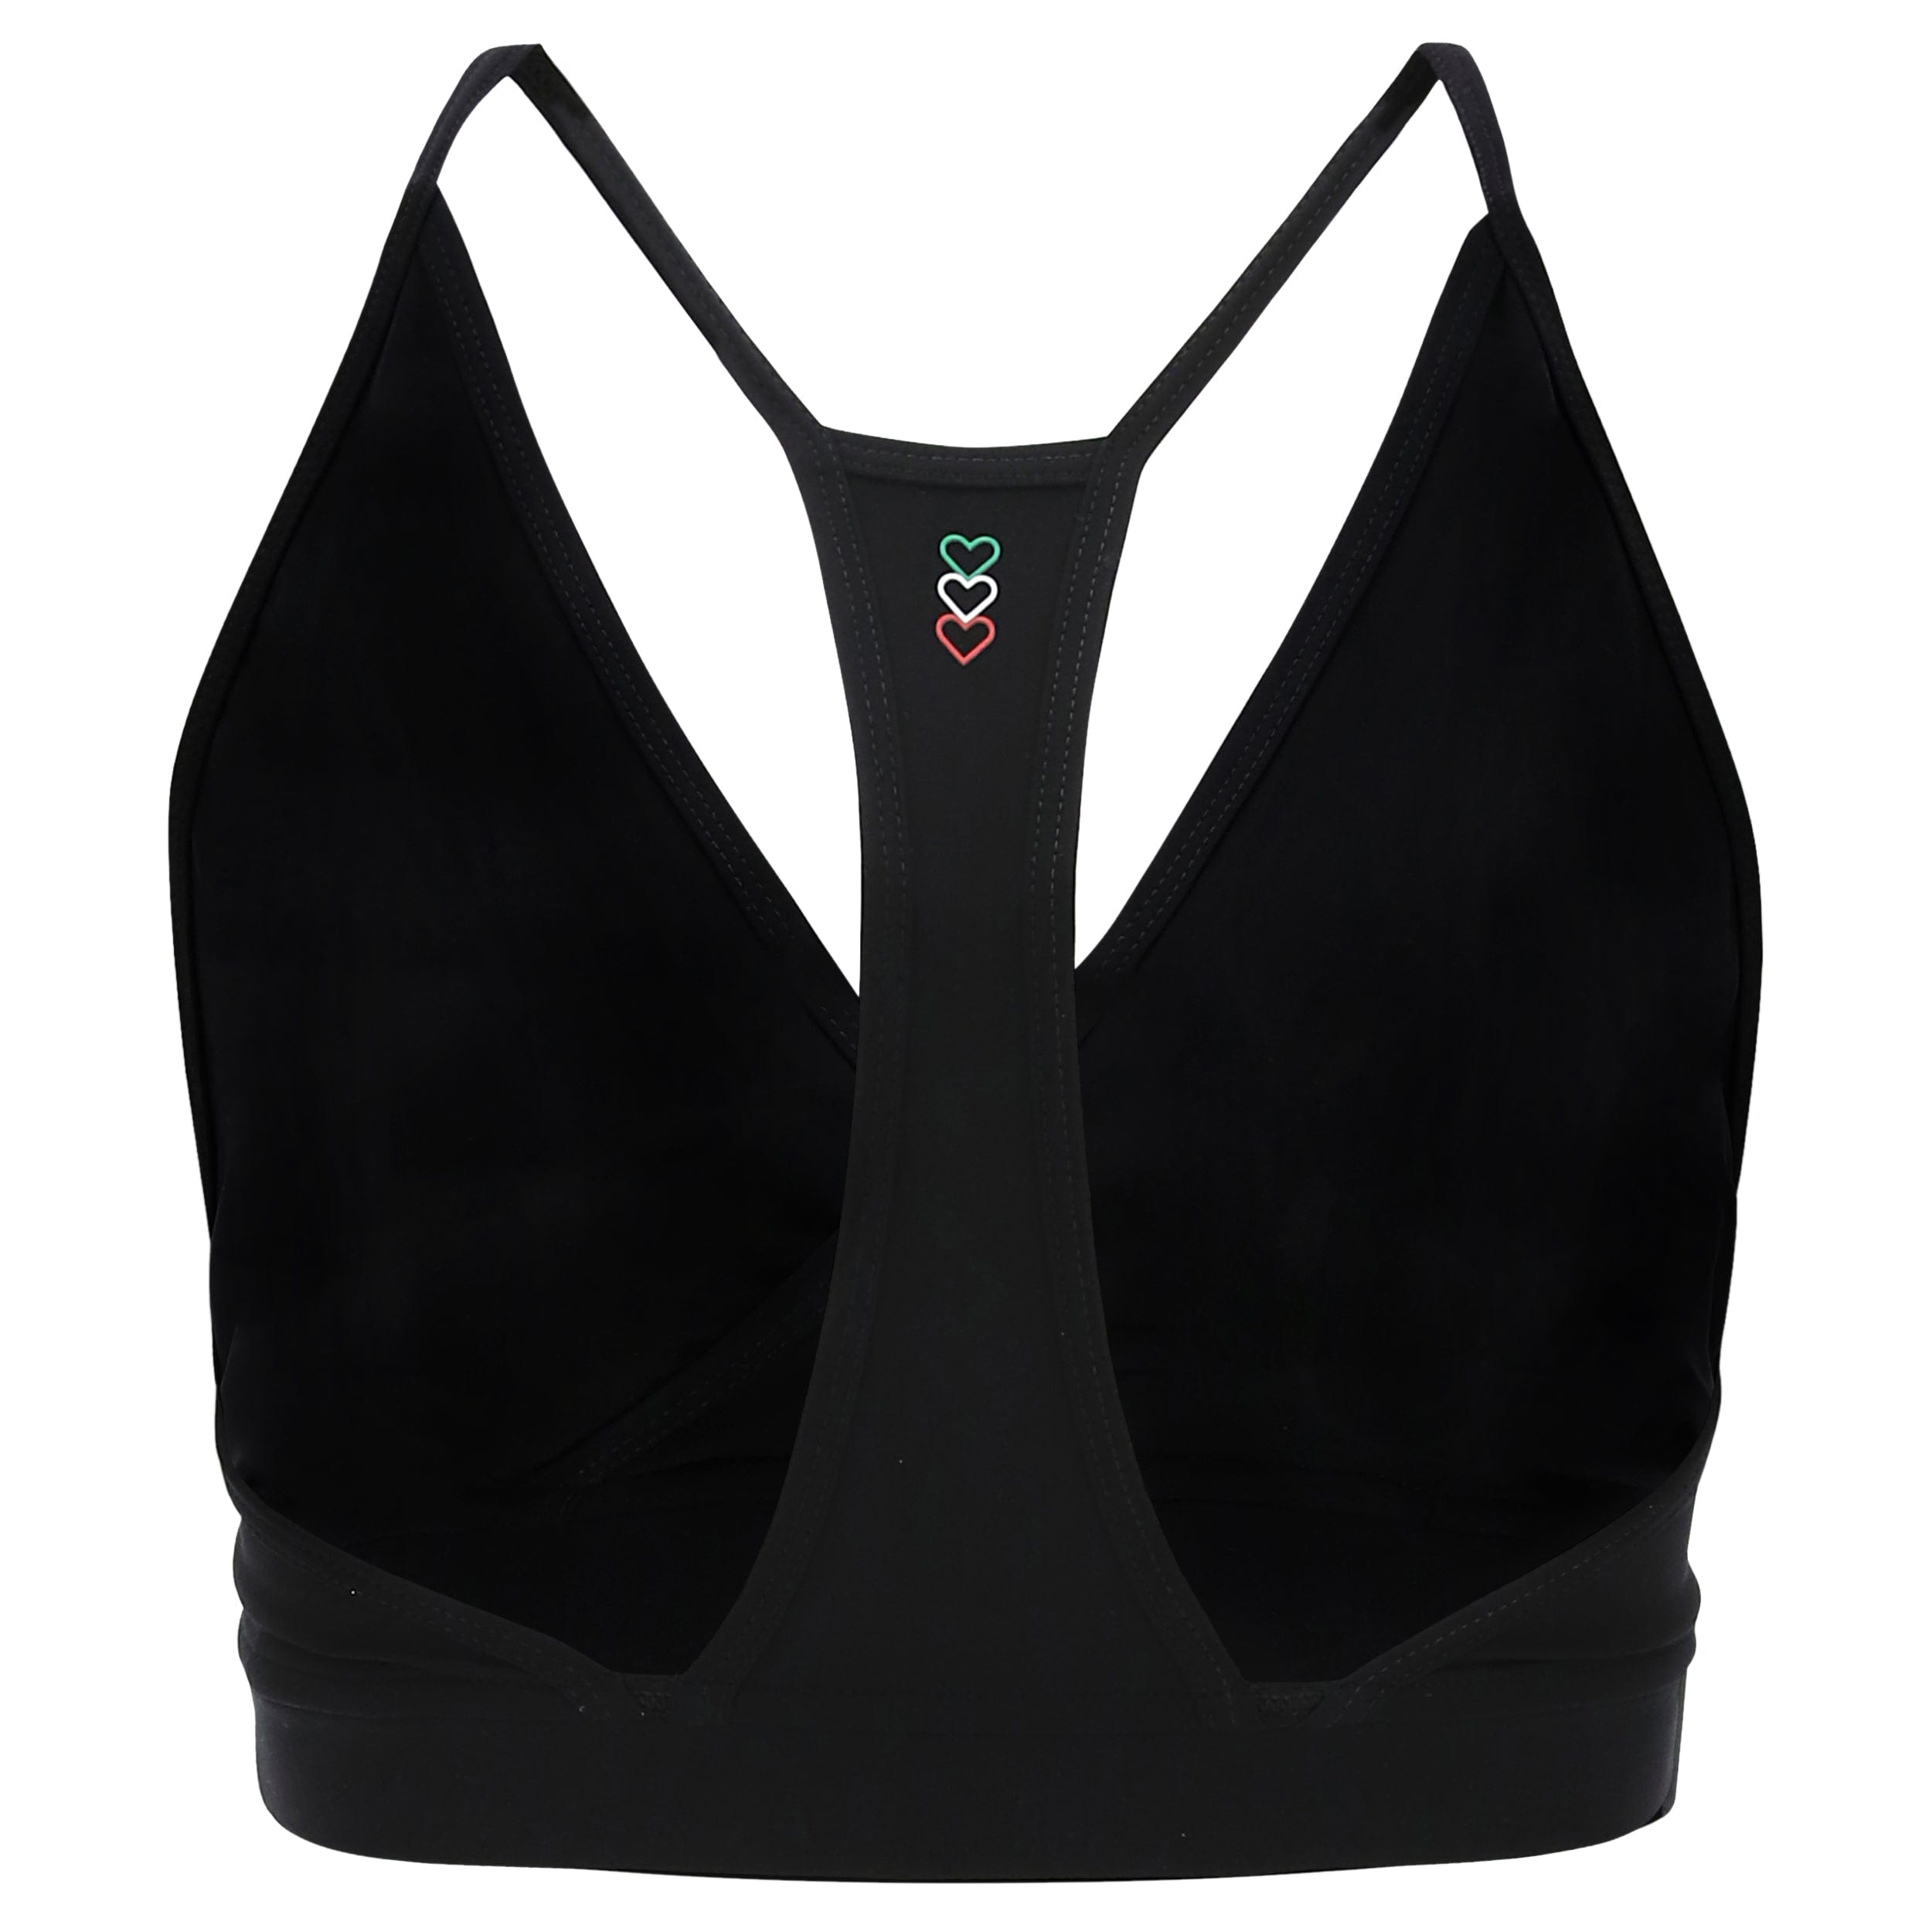 Women’s criss cross yoga/sports bra - 100% Made in Italy 2